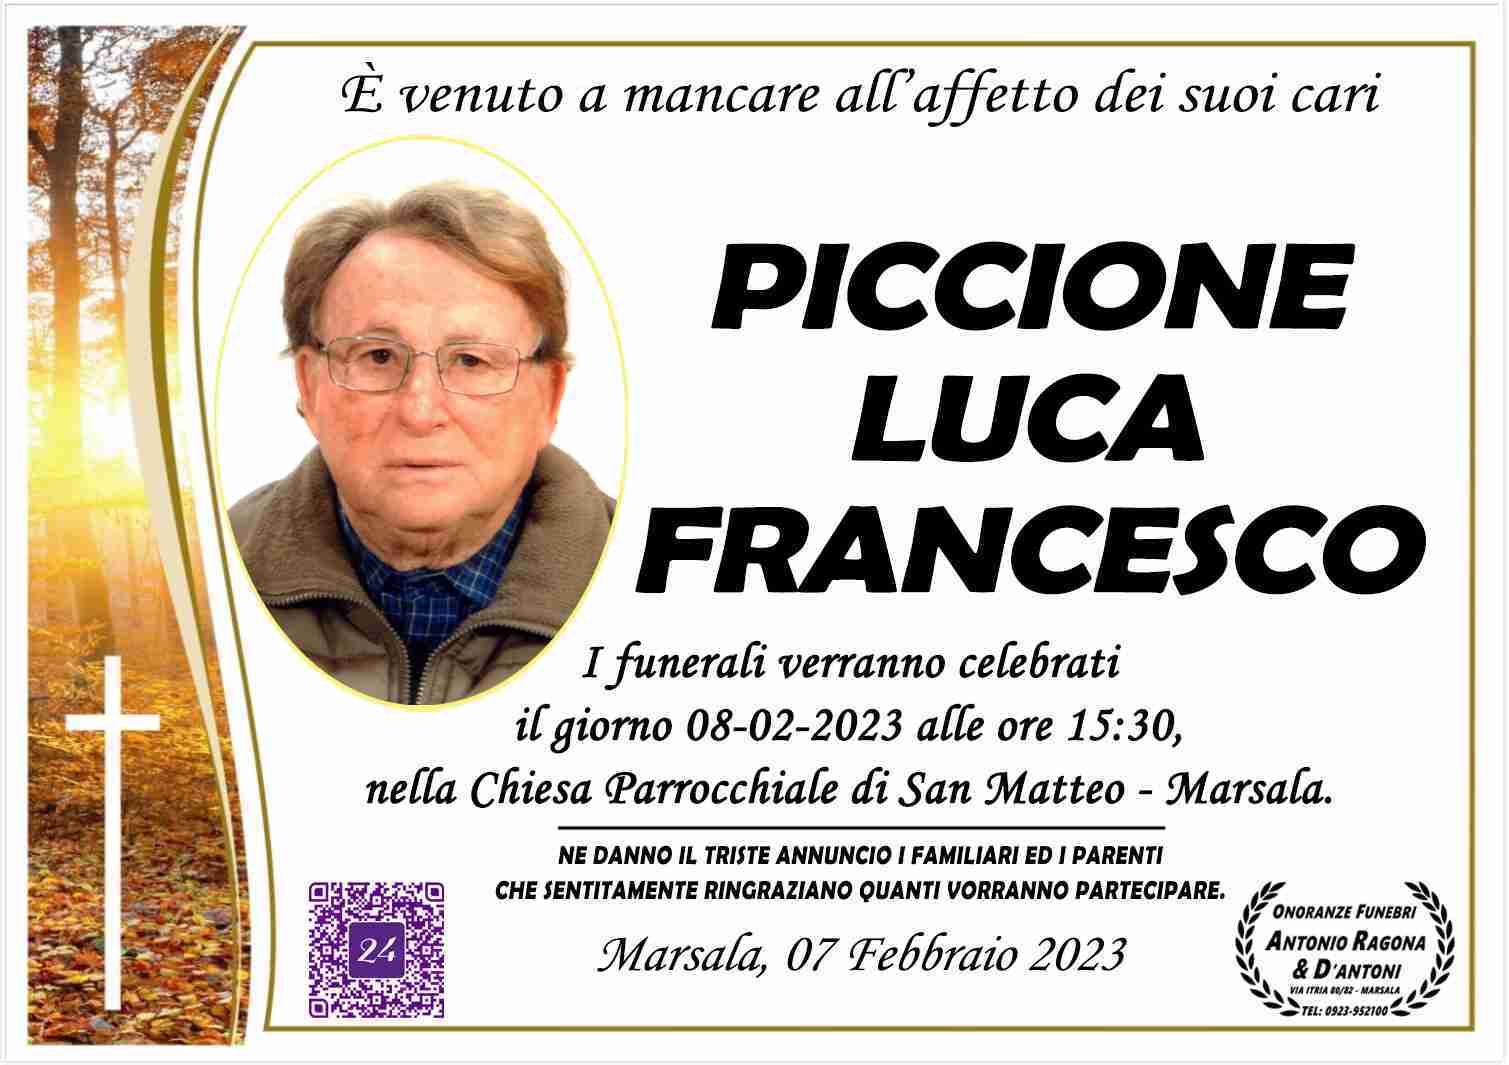 Luca Francesco Piccione